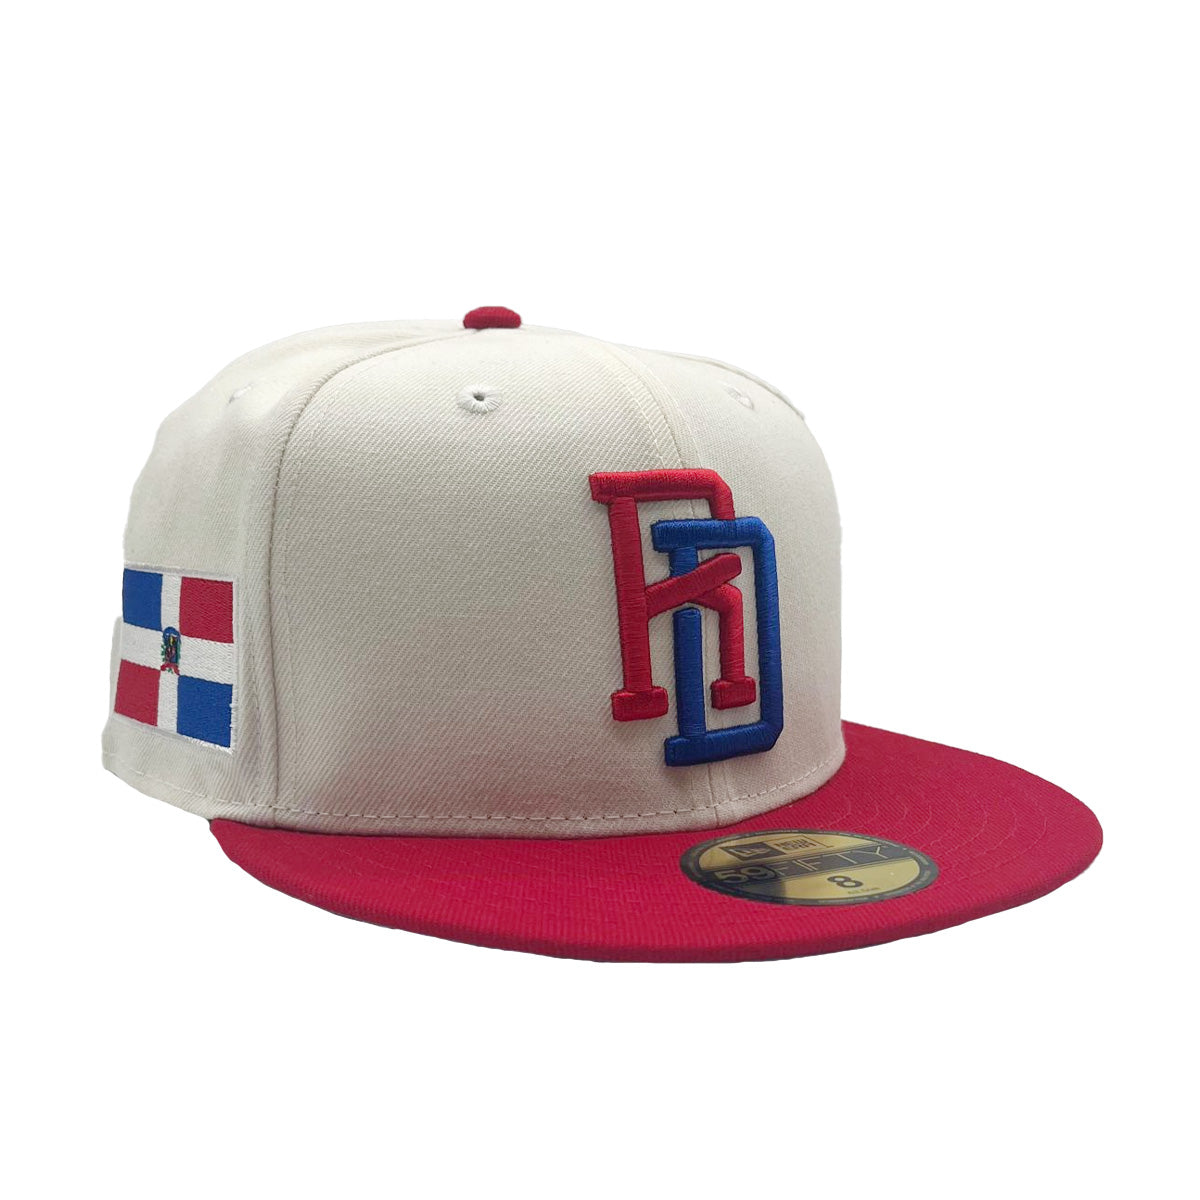 New Era Mens Puerto Rico Wbc World Baseball Classic 59FIFTY Fitted Hat 70773972 White/Royal Blue, Grey Undervisor 7 3/8